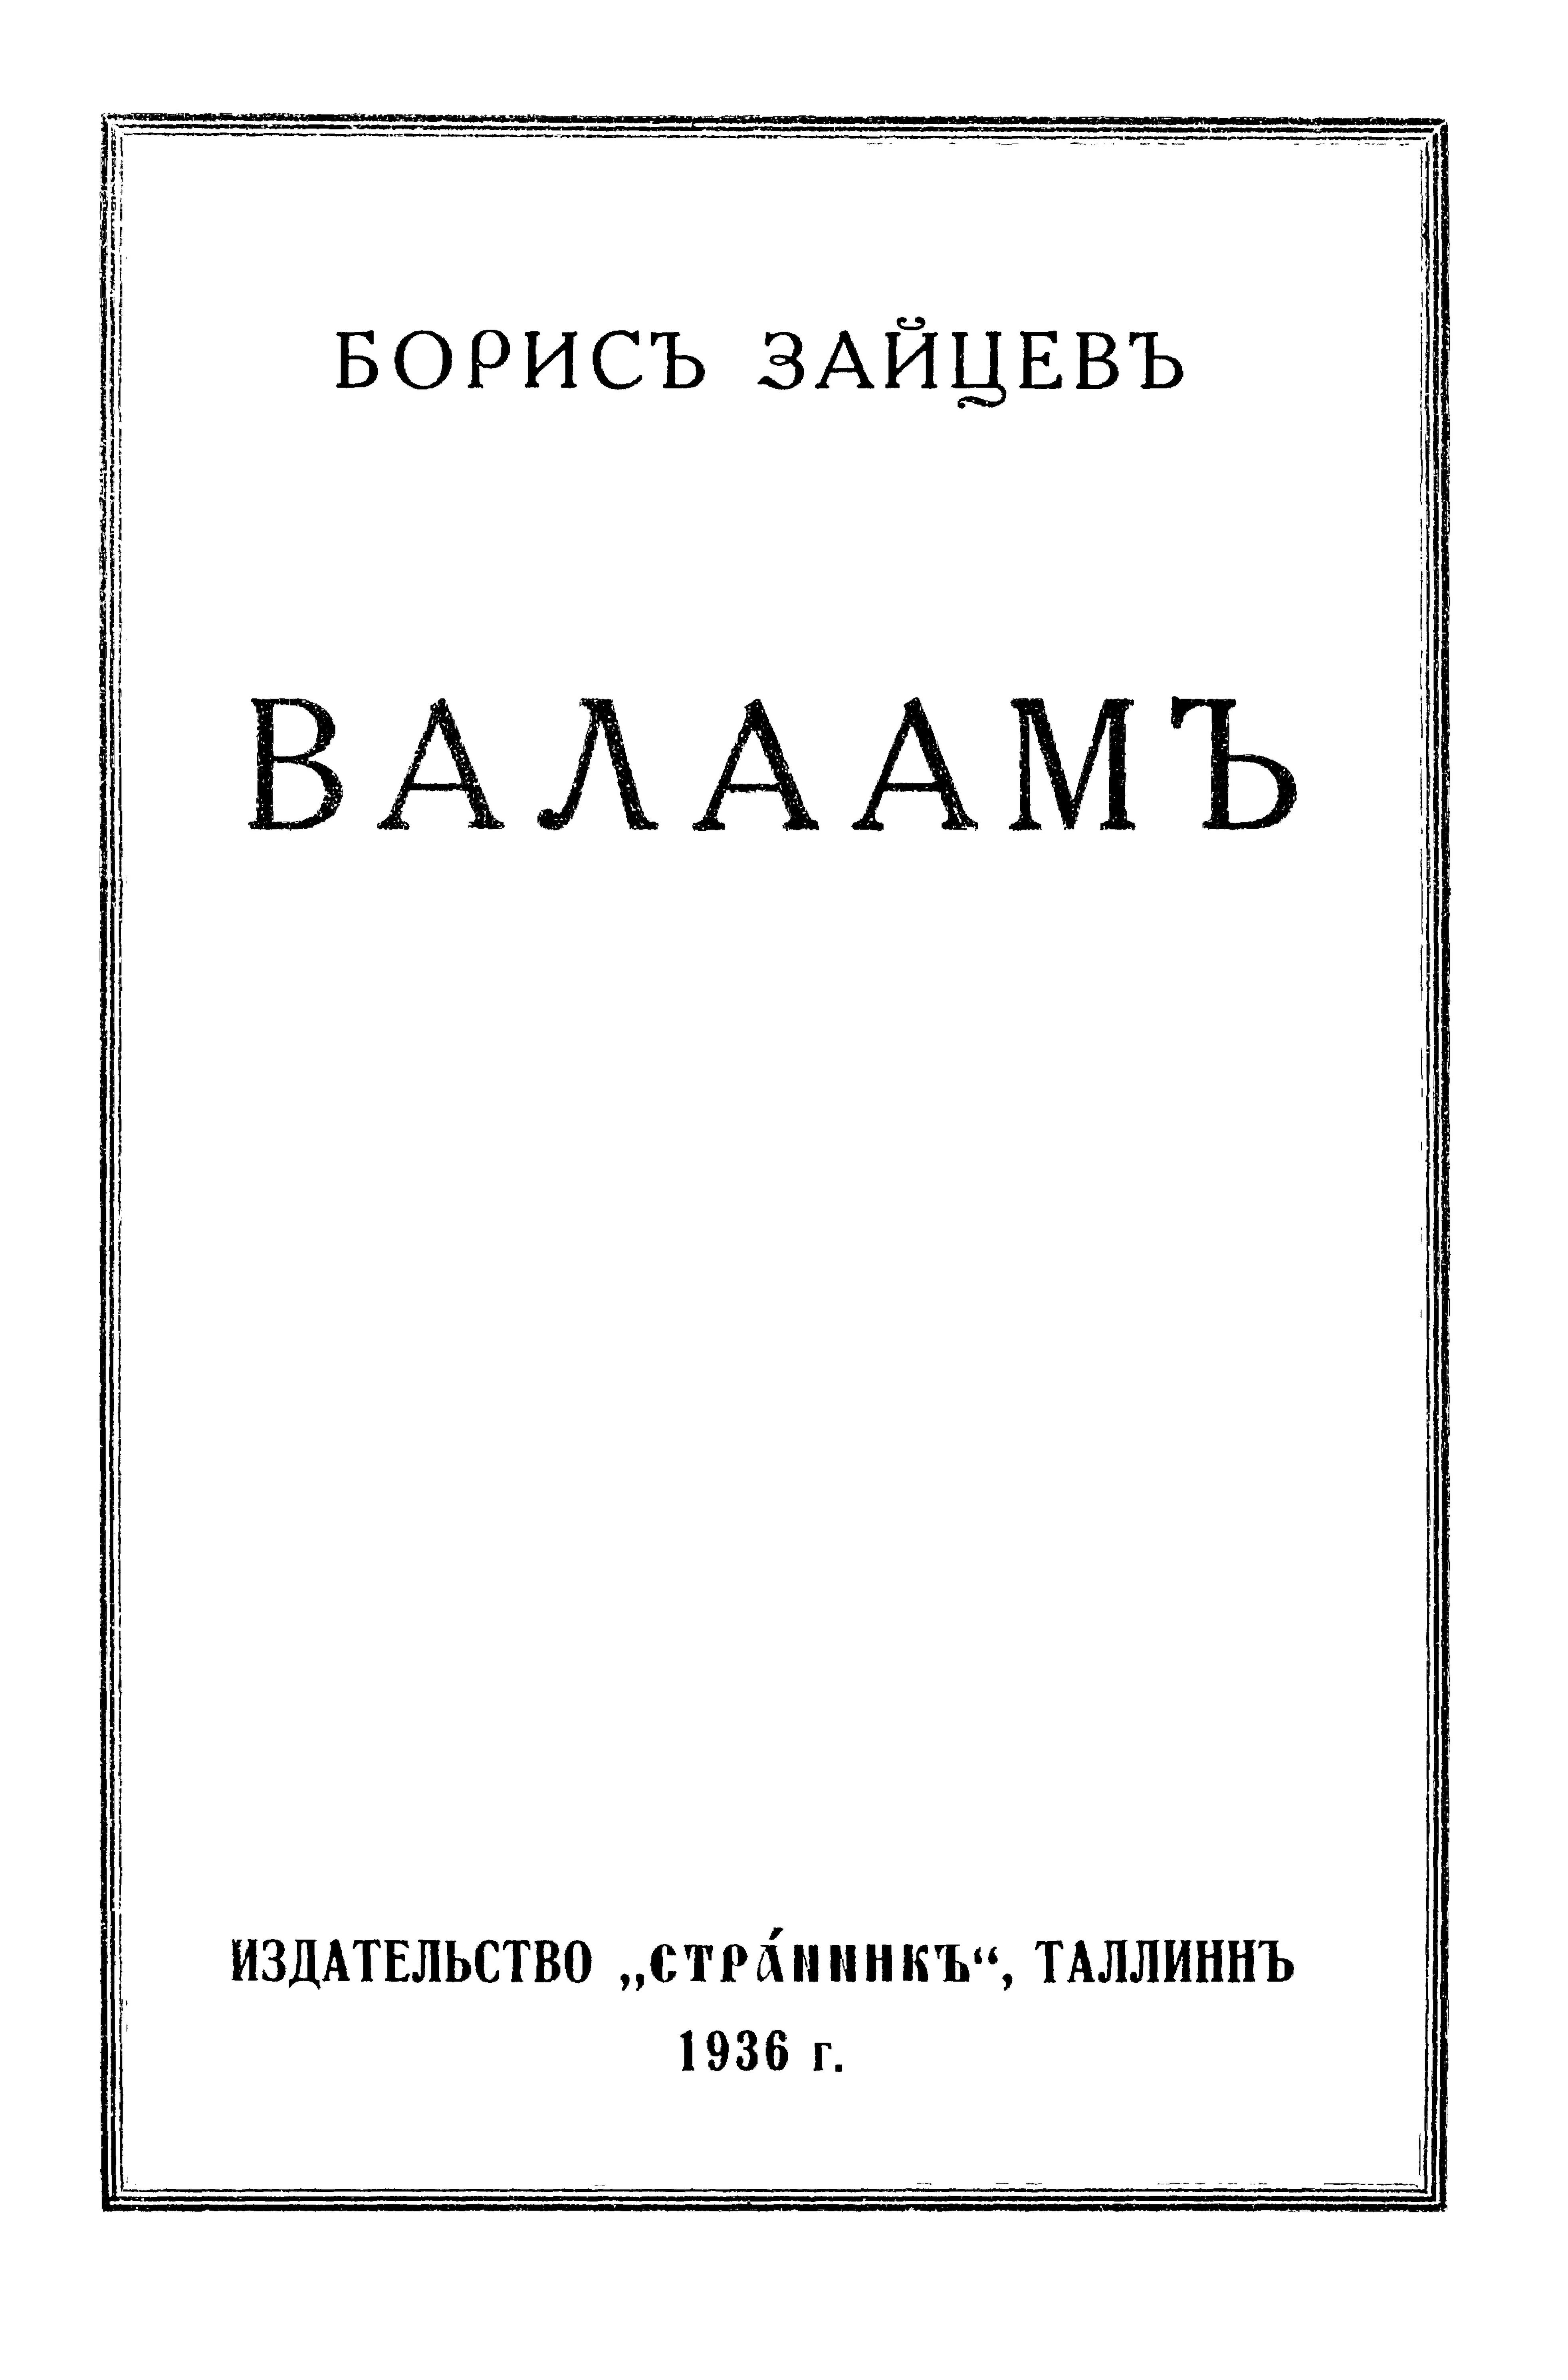 Валаам (Борис Зайцев).pdf